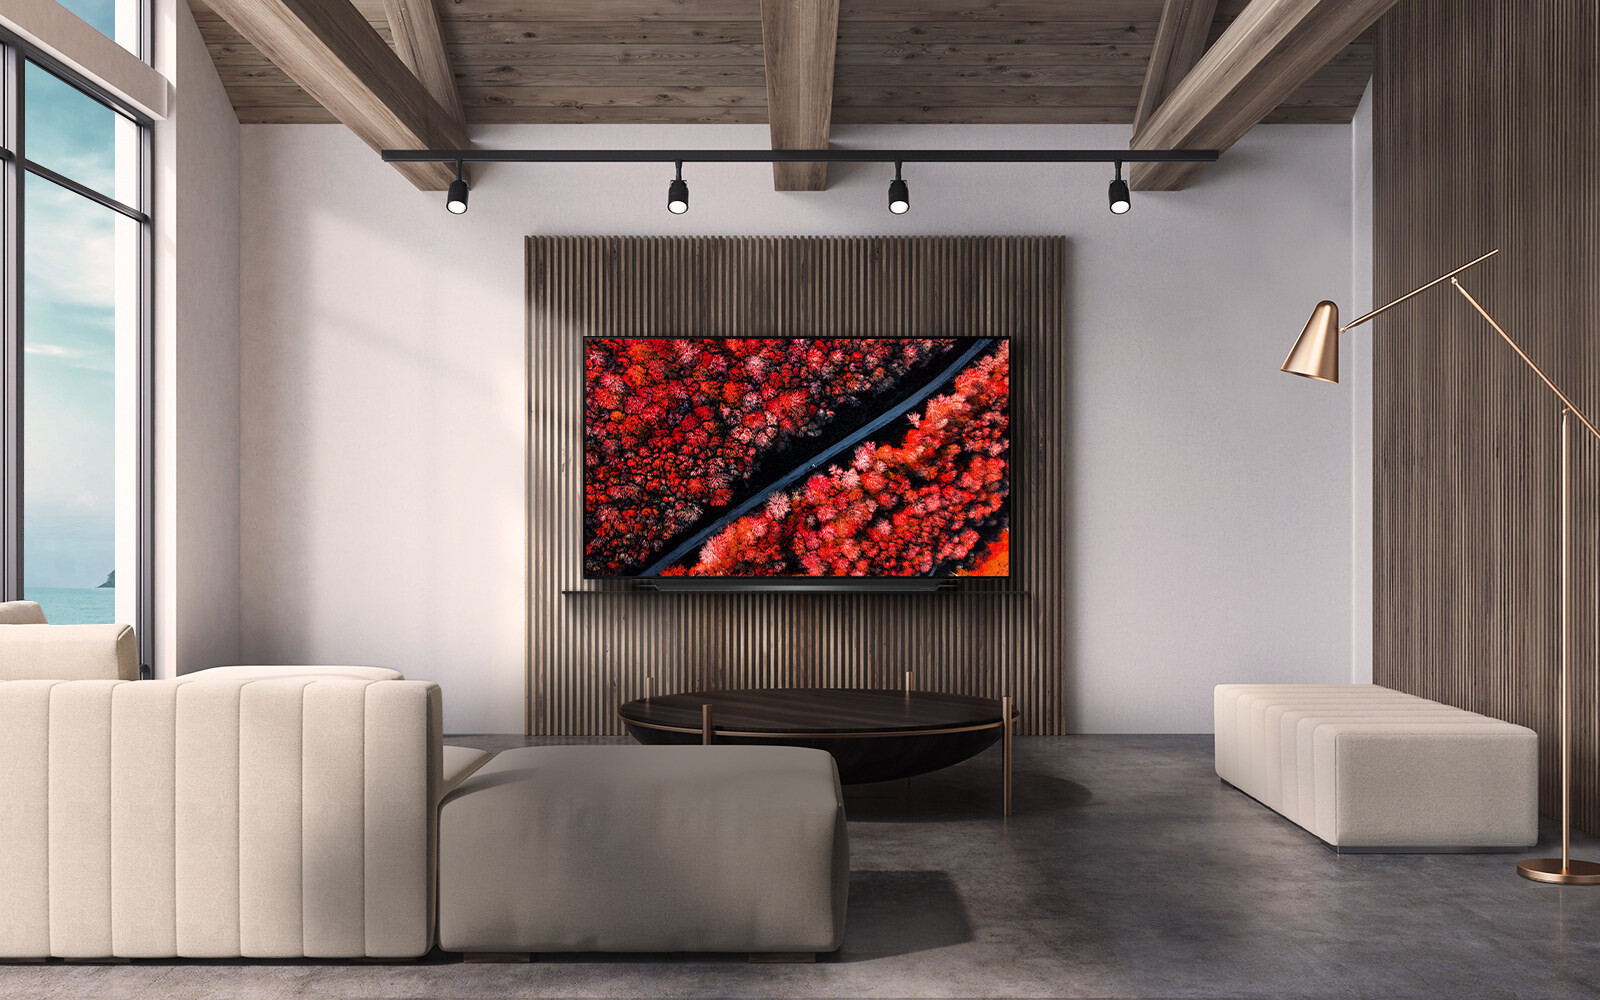 LG unveils its Black Friday sale on 2019 OLED TVs - www.bagssaleusa.com News